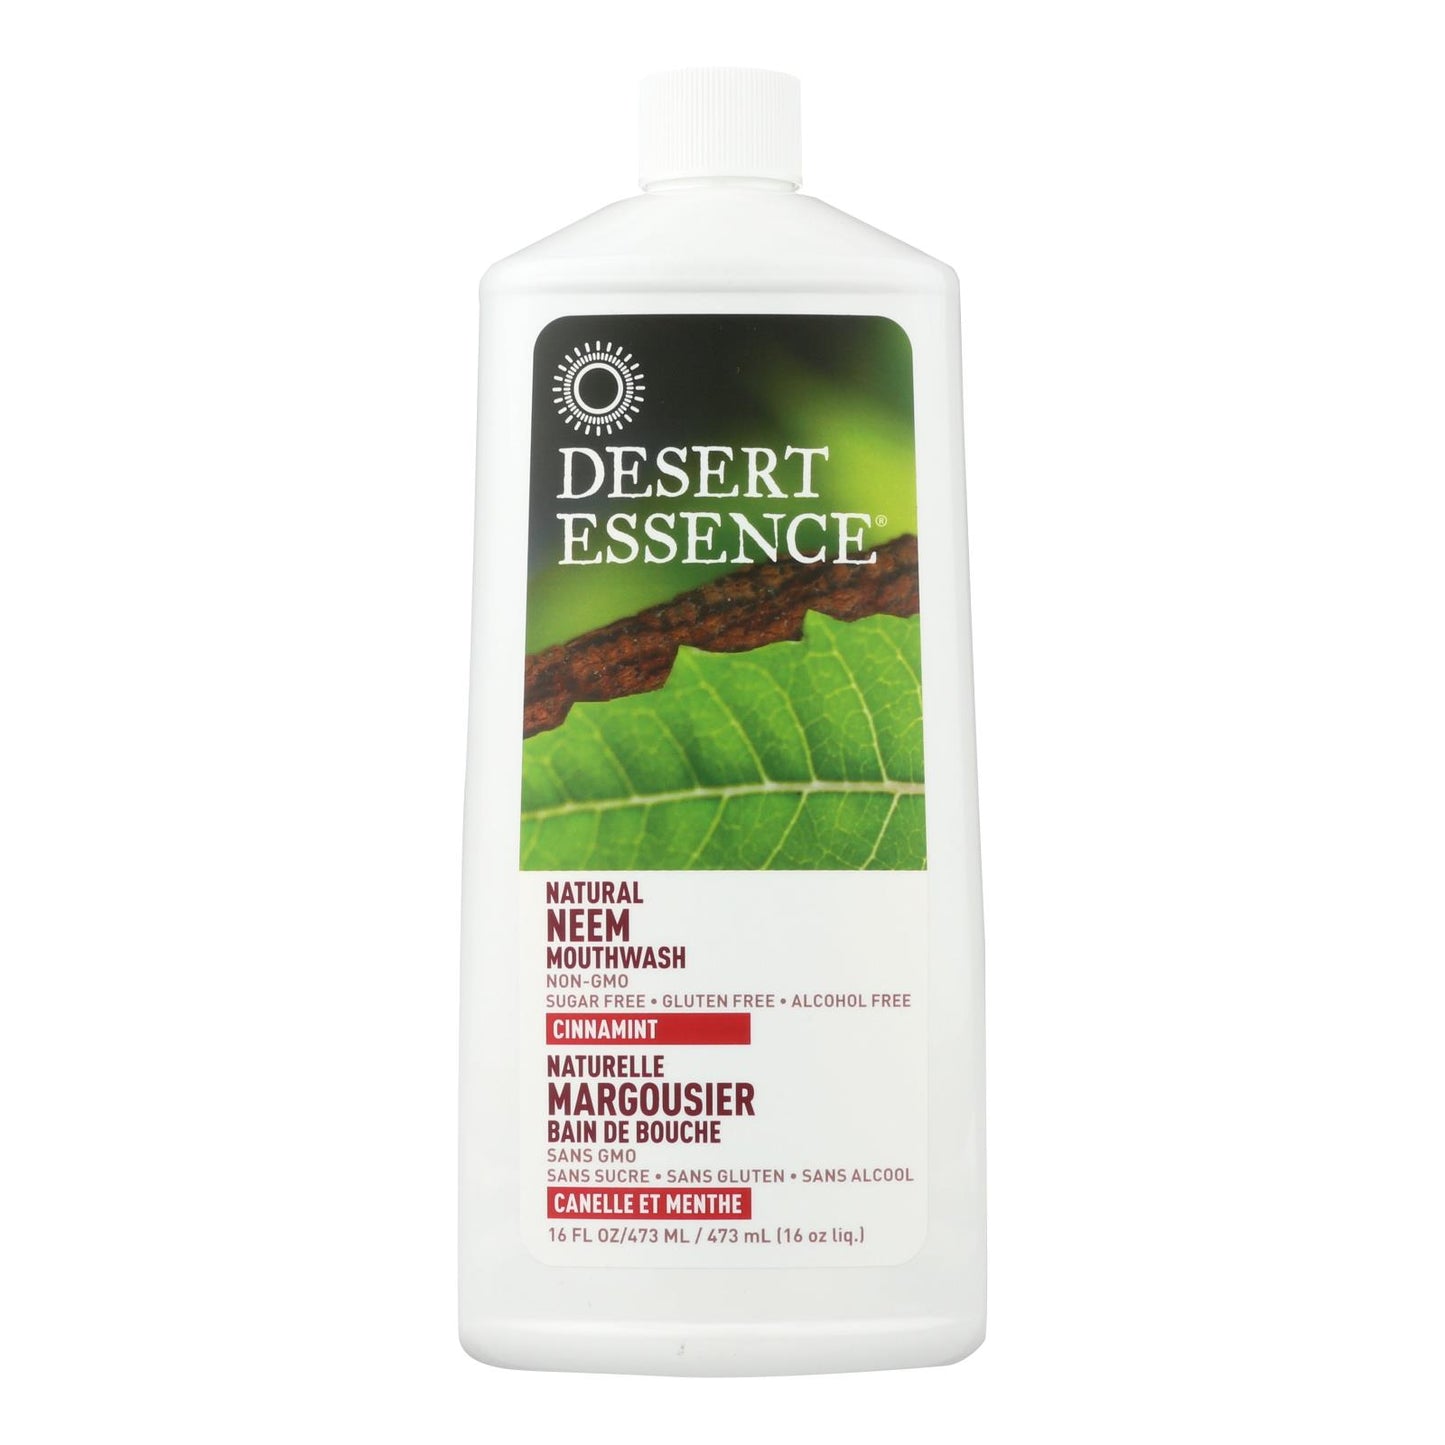 Natural Neem Cinnamint Mouthwash| Desert Essence